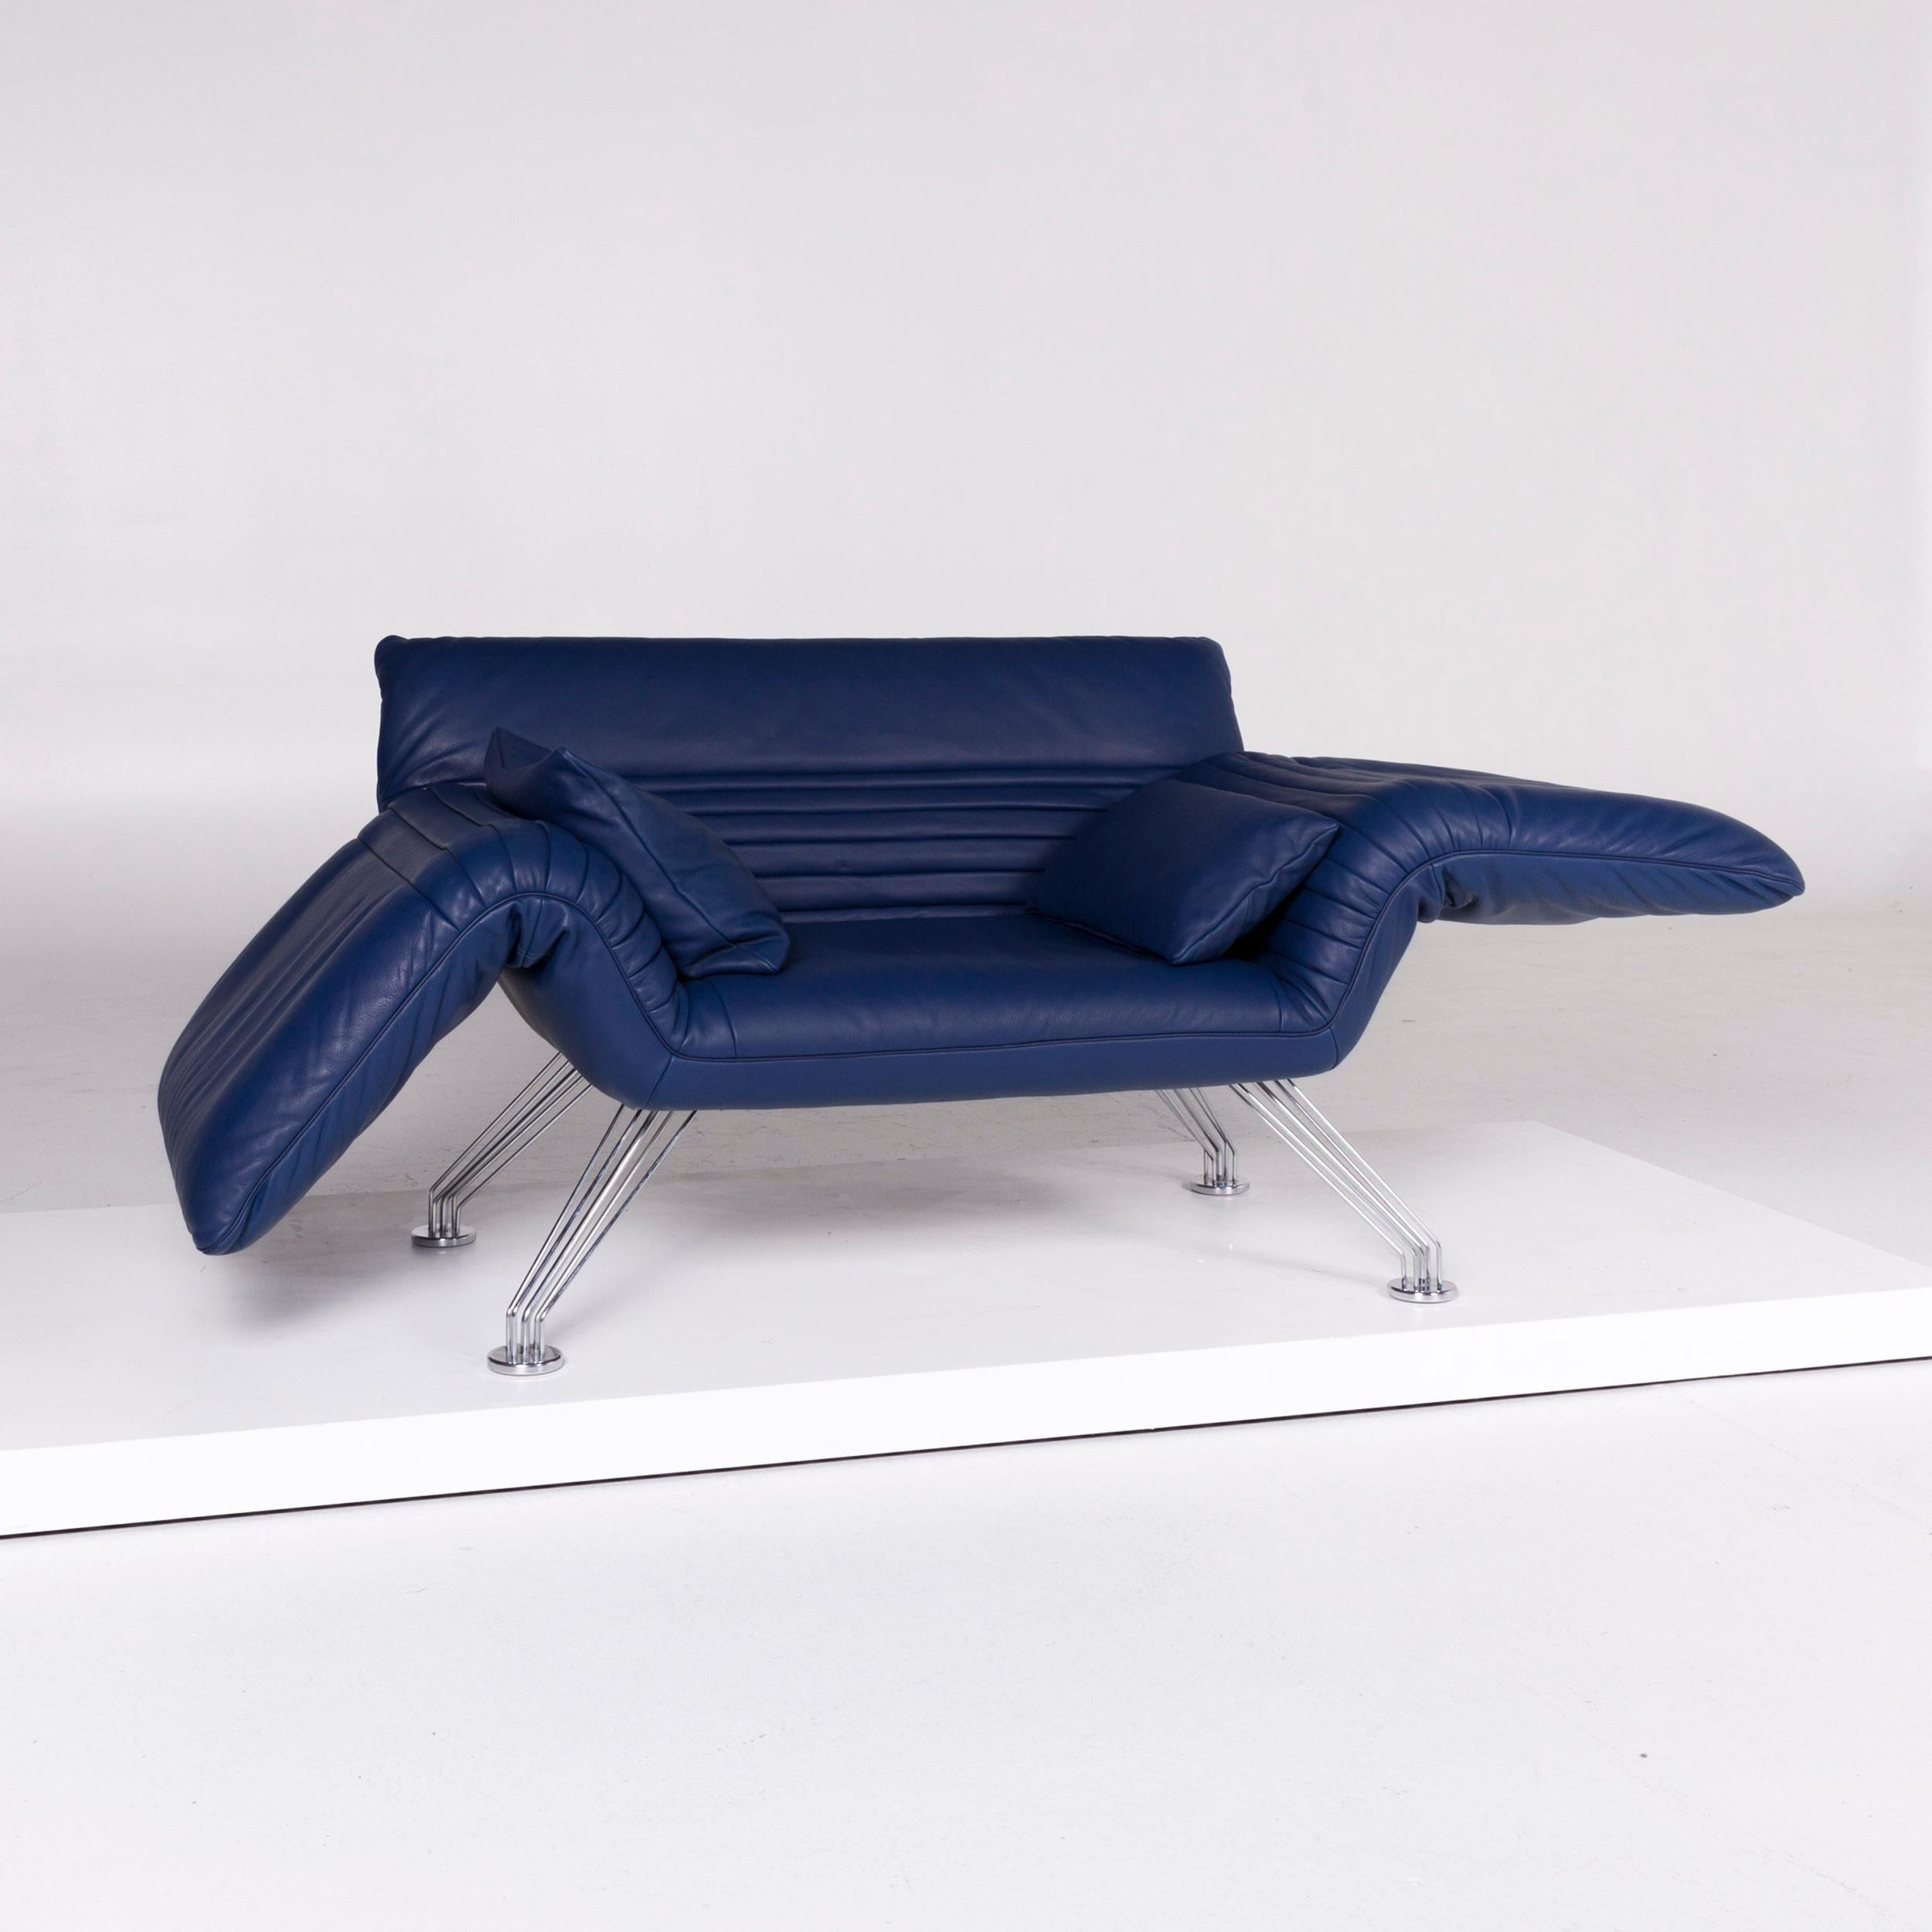 We bring to you a De Sede ds 142 designer Leder Sessel by Wilfried Totzek Blau Sessel.
 
 
 Product measurements in centimeters:
 
Depth: 81
 Width: 170
 Height: 61
 Seat-height: 39
 Rest-height: 56
 Seat-depth: 56
 Seat-width: 73
